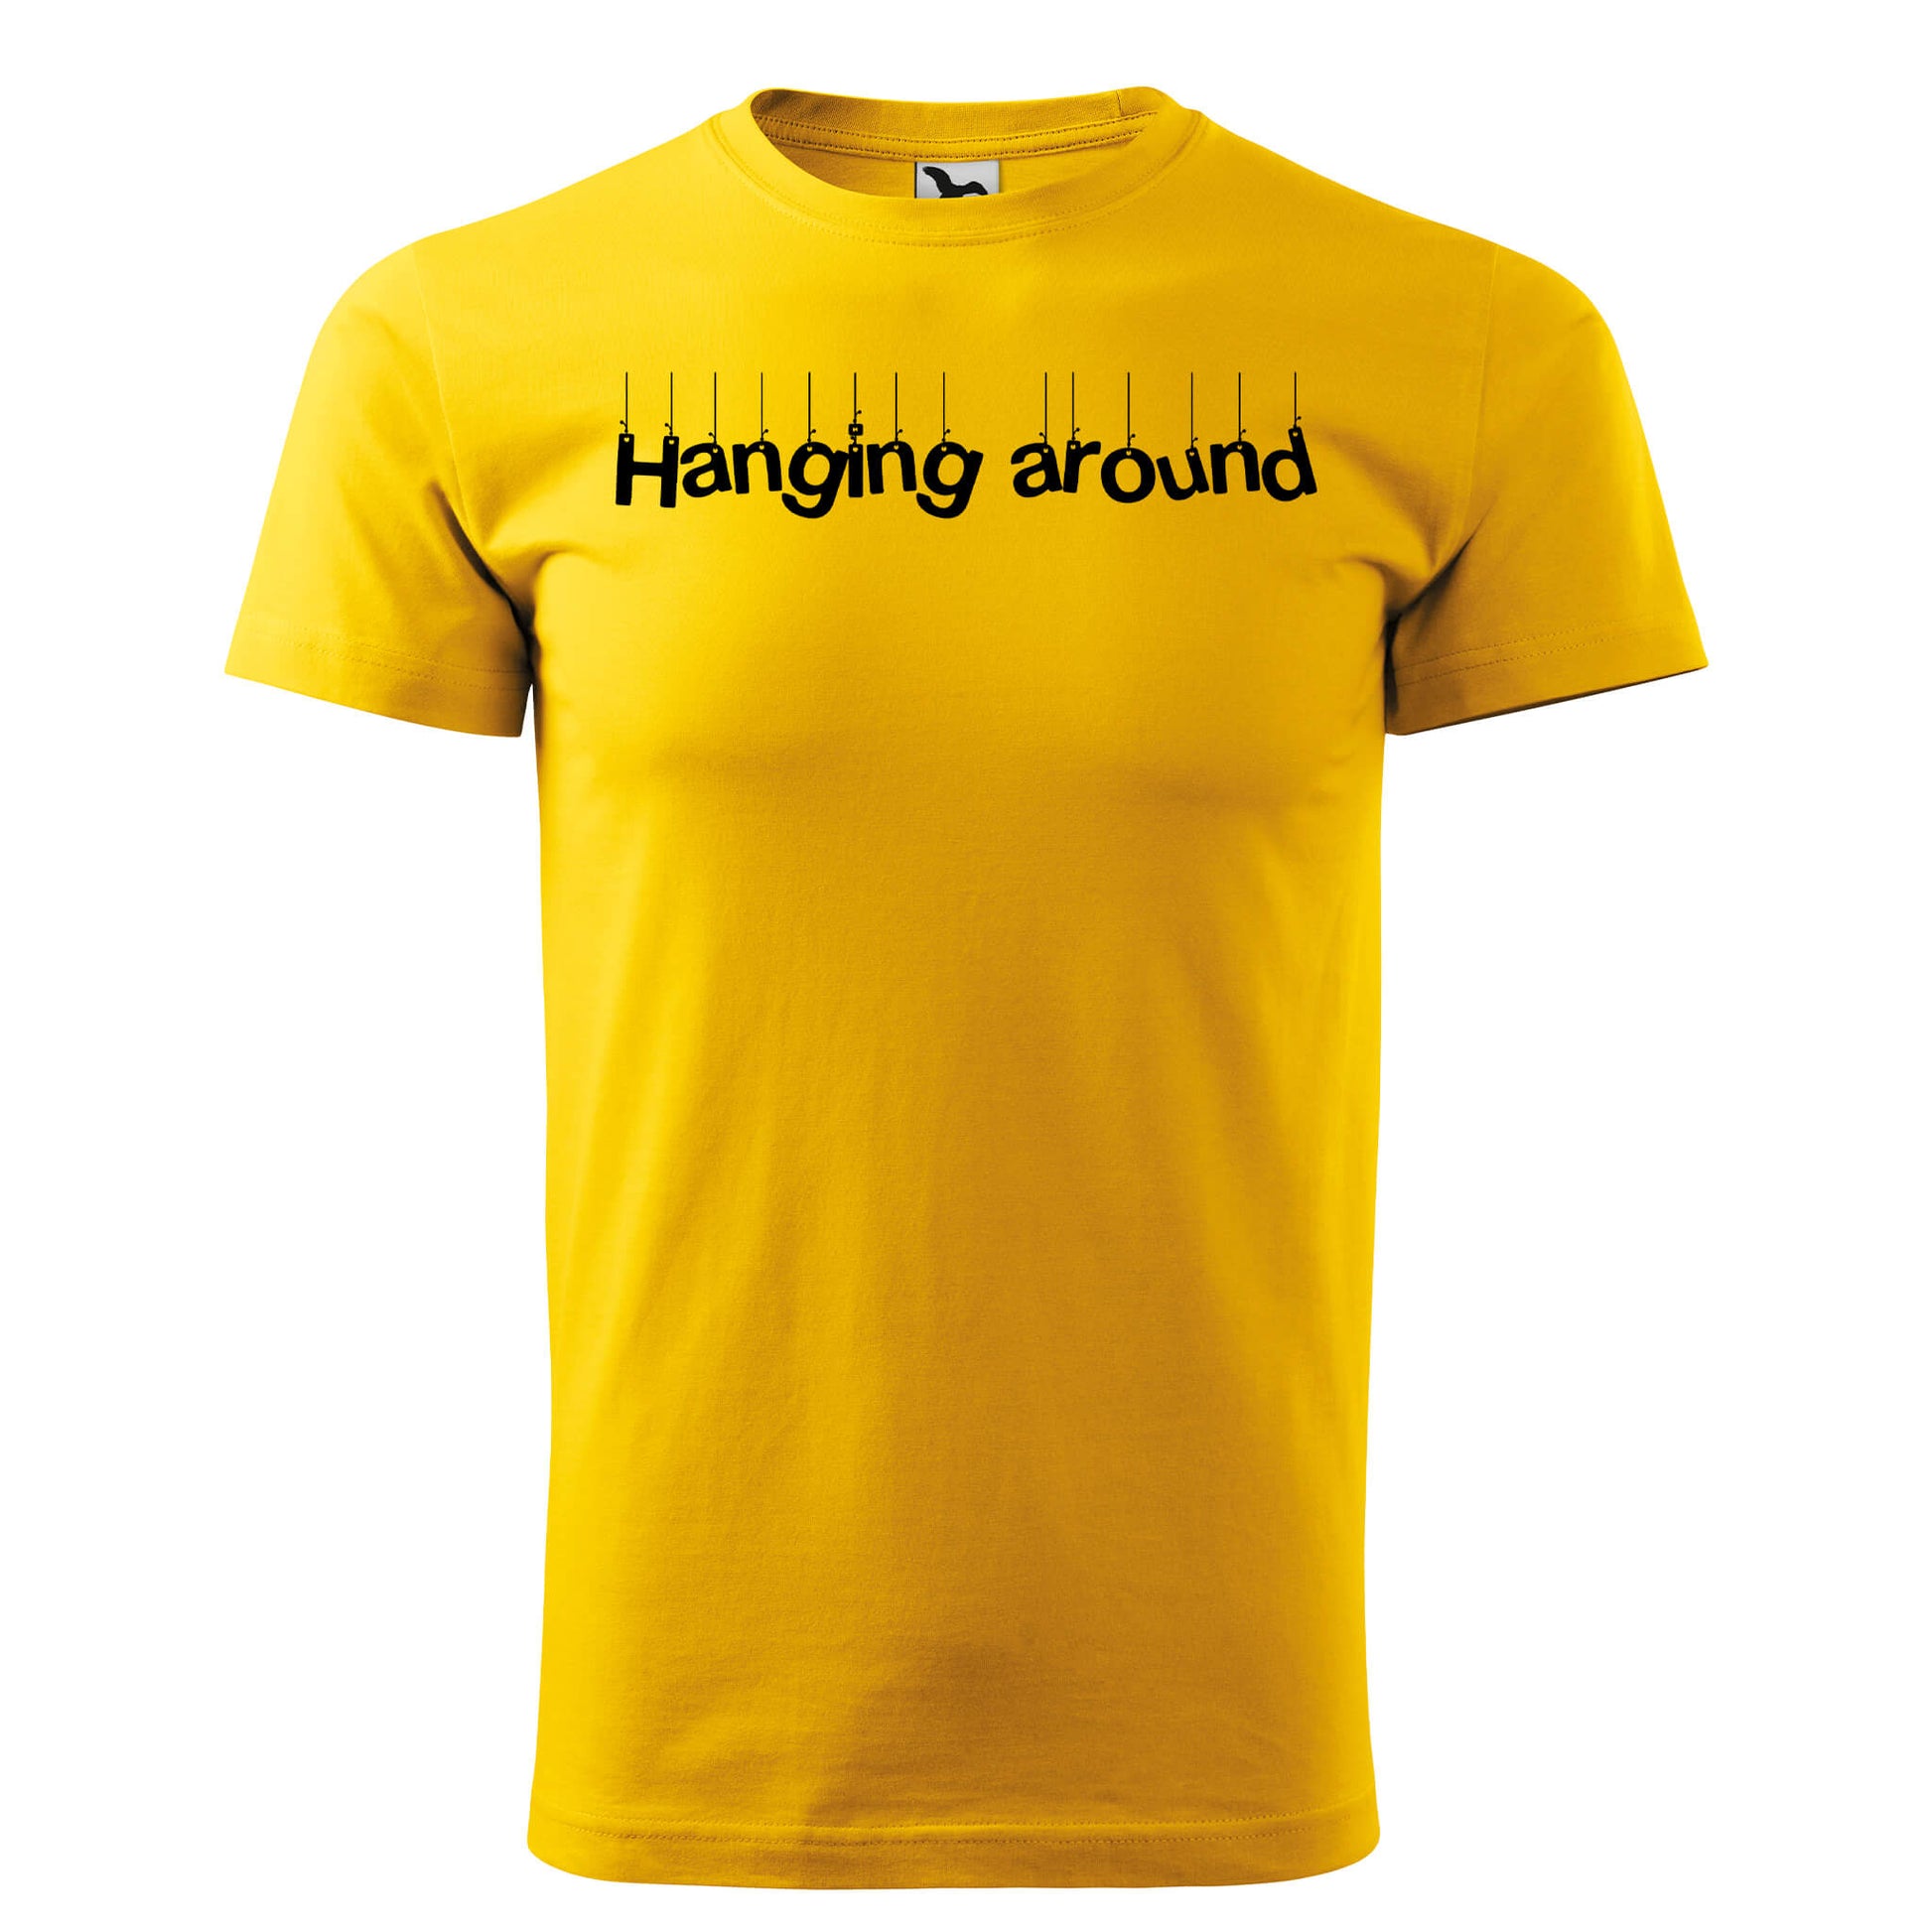 T-shirt - Hanging around - rvdesignprint